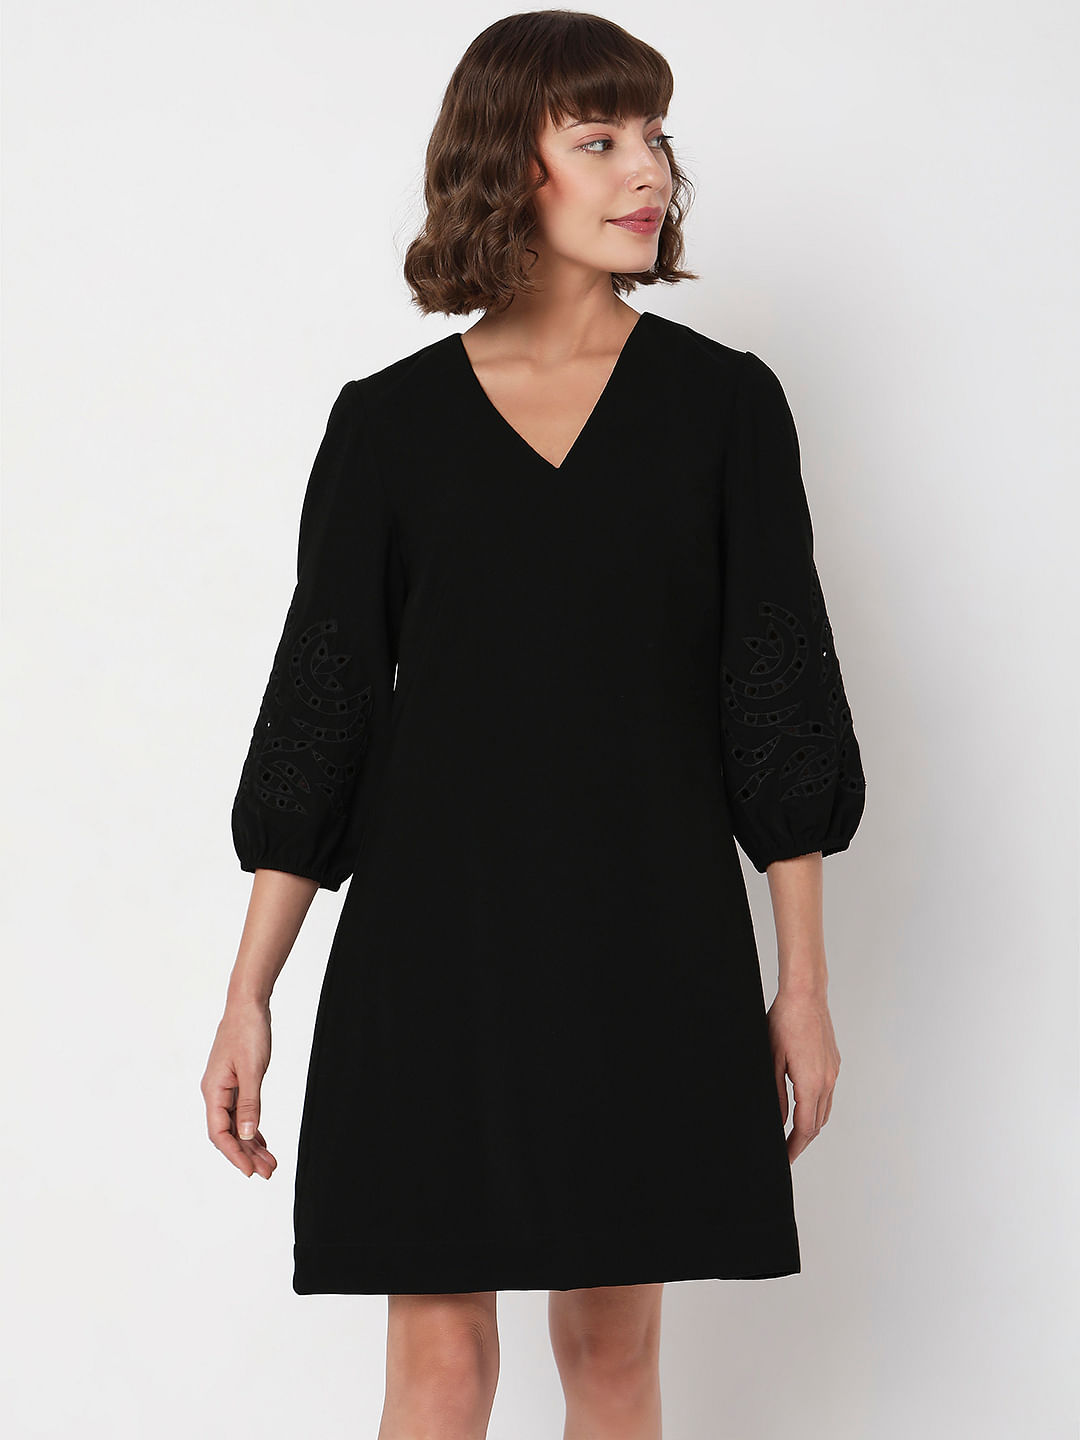 The Black V Neck Floral Short Sleeve Maxi Dress - Short Sleeve Day&Evening  Casual Maxi Dress - Black - Dresses | RIHOAS